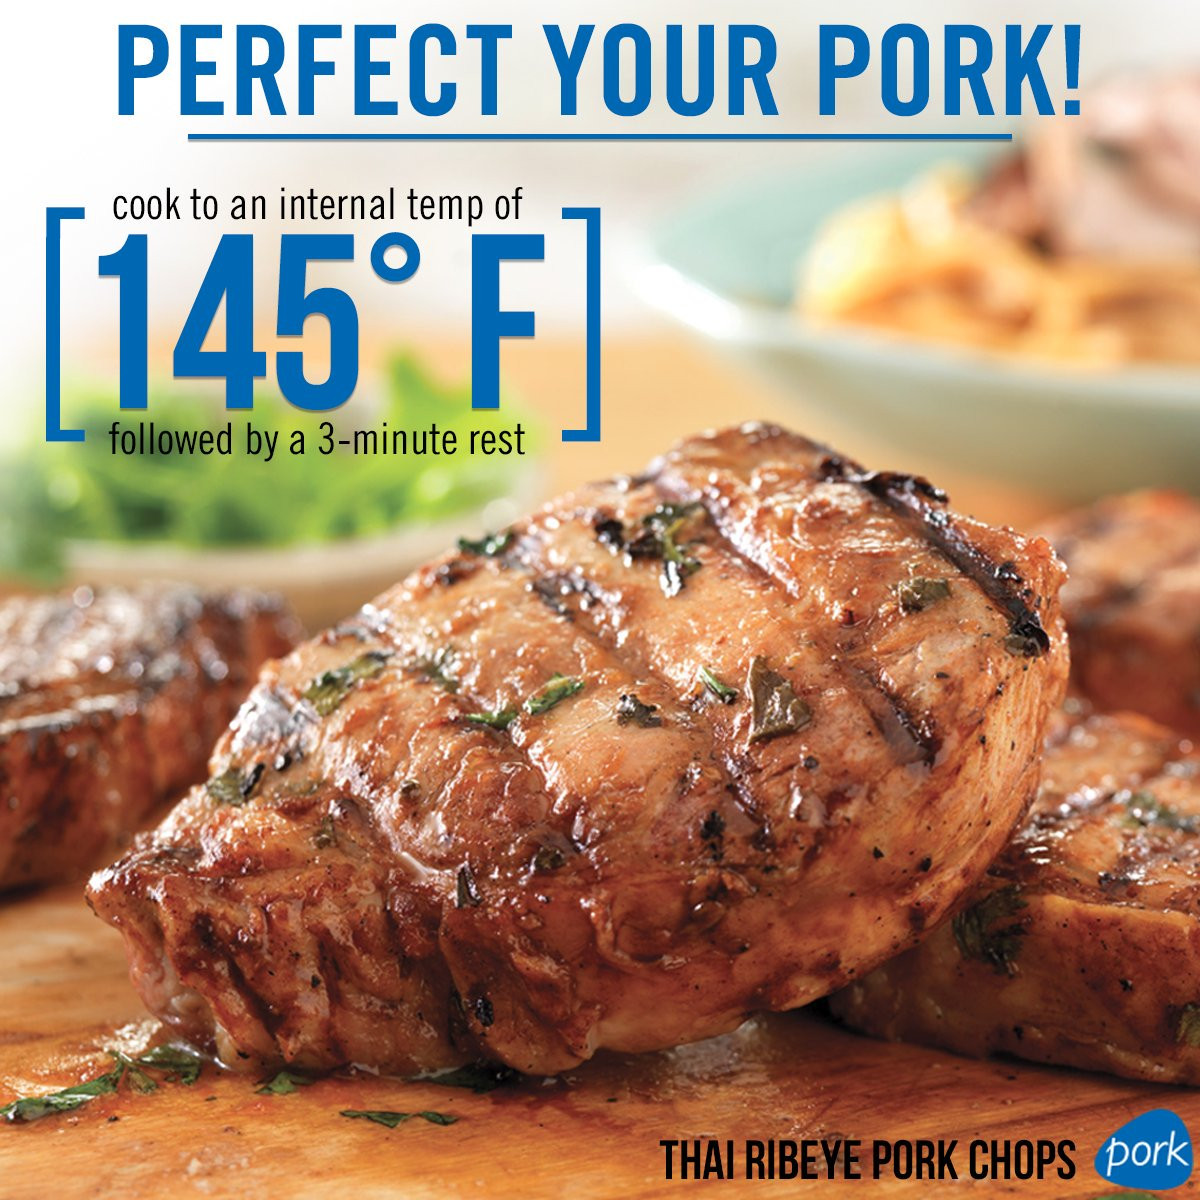 Pork Chops Internal Temp
 National Pork Board on Twitter "Perfect your pork chops